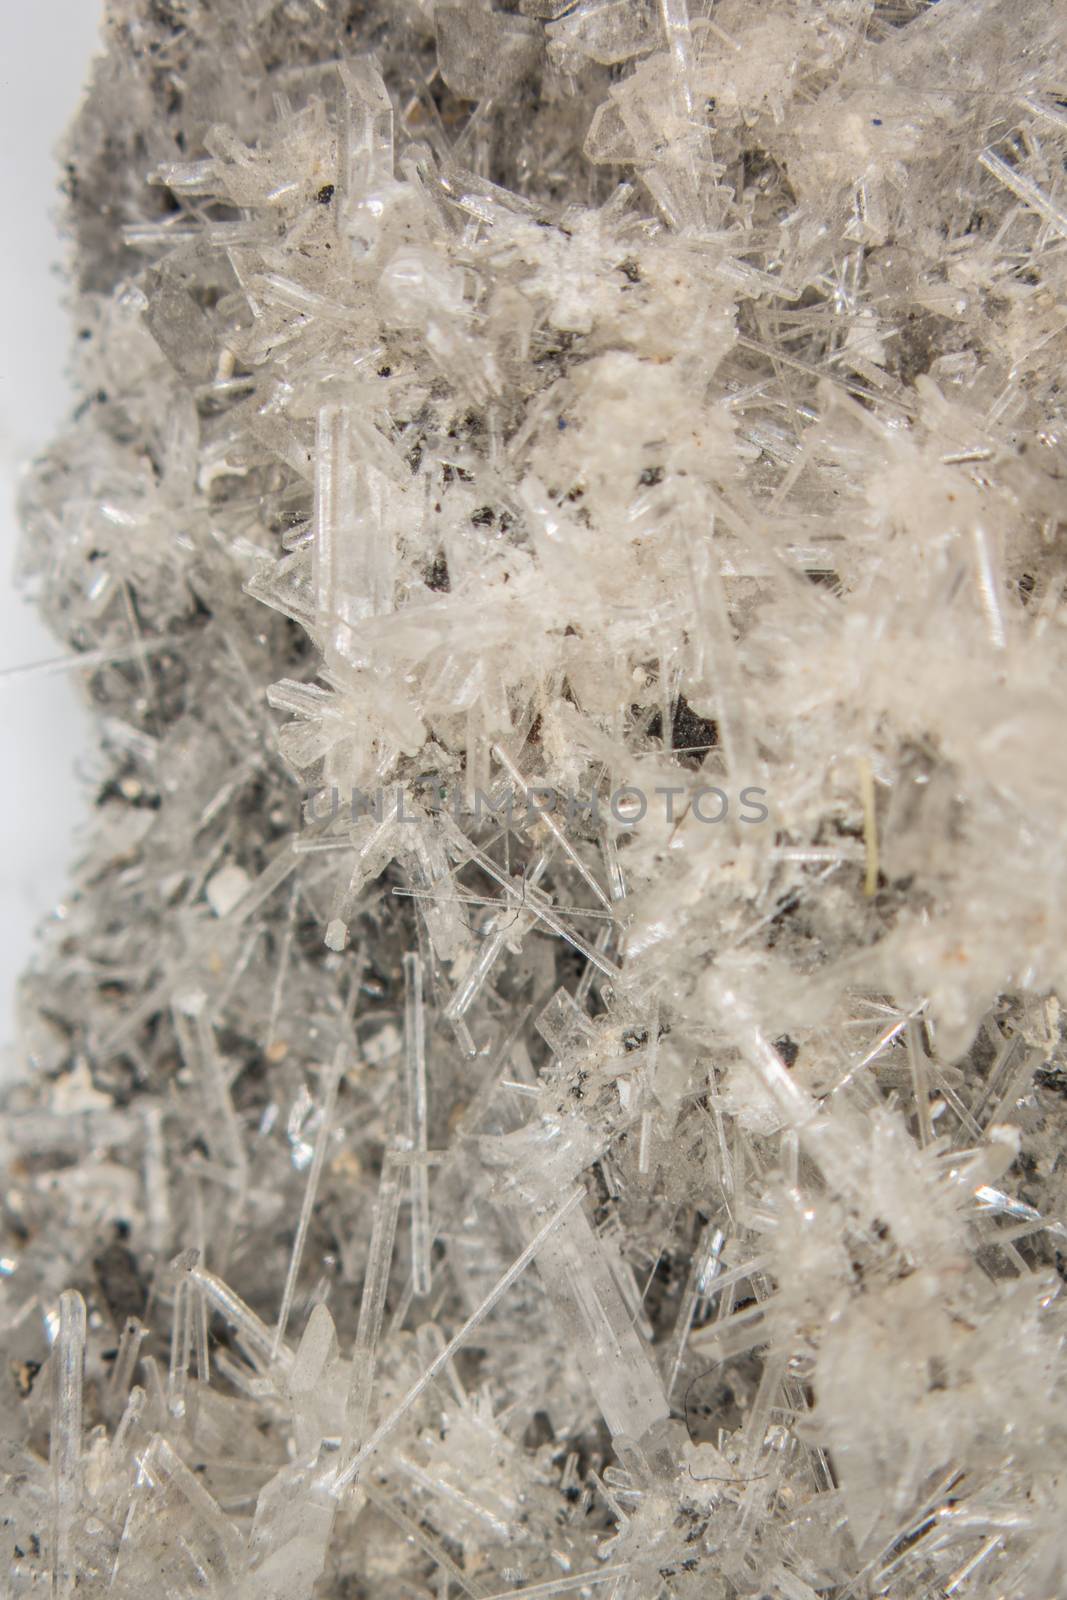 Selenite crystal needles on rock by Dr-Lange